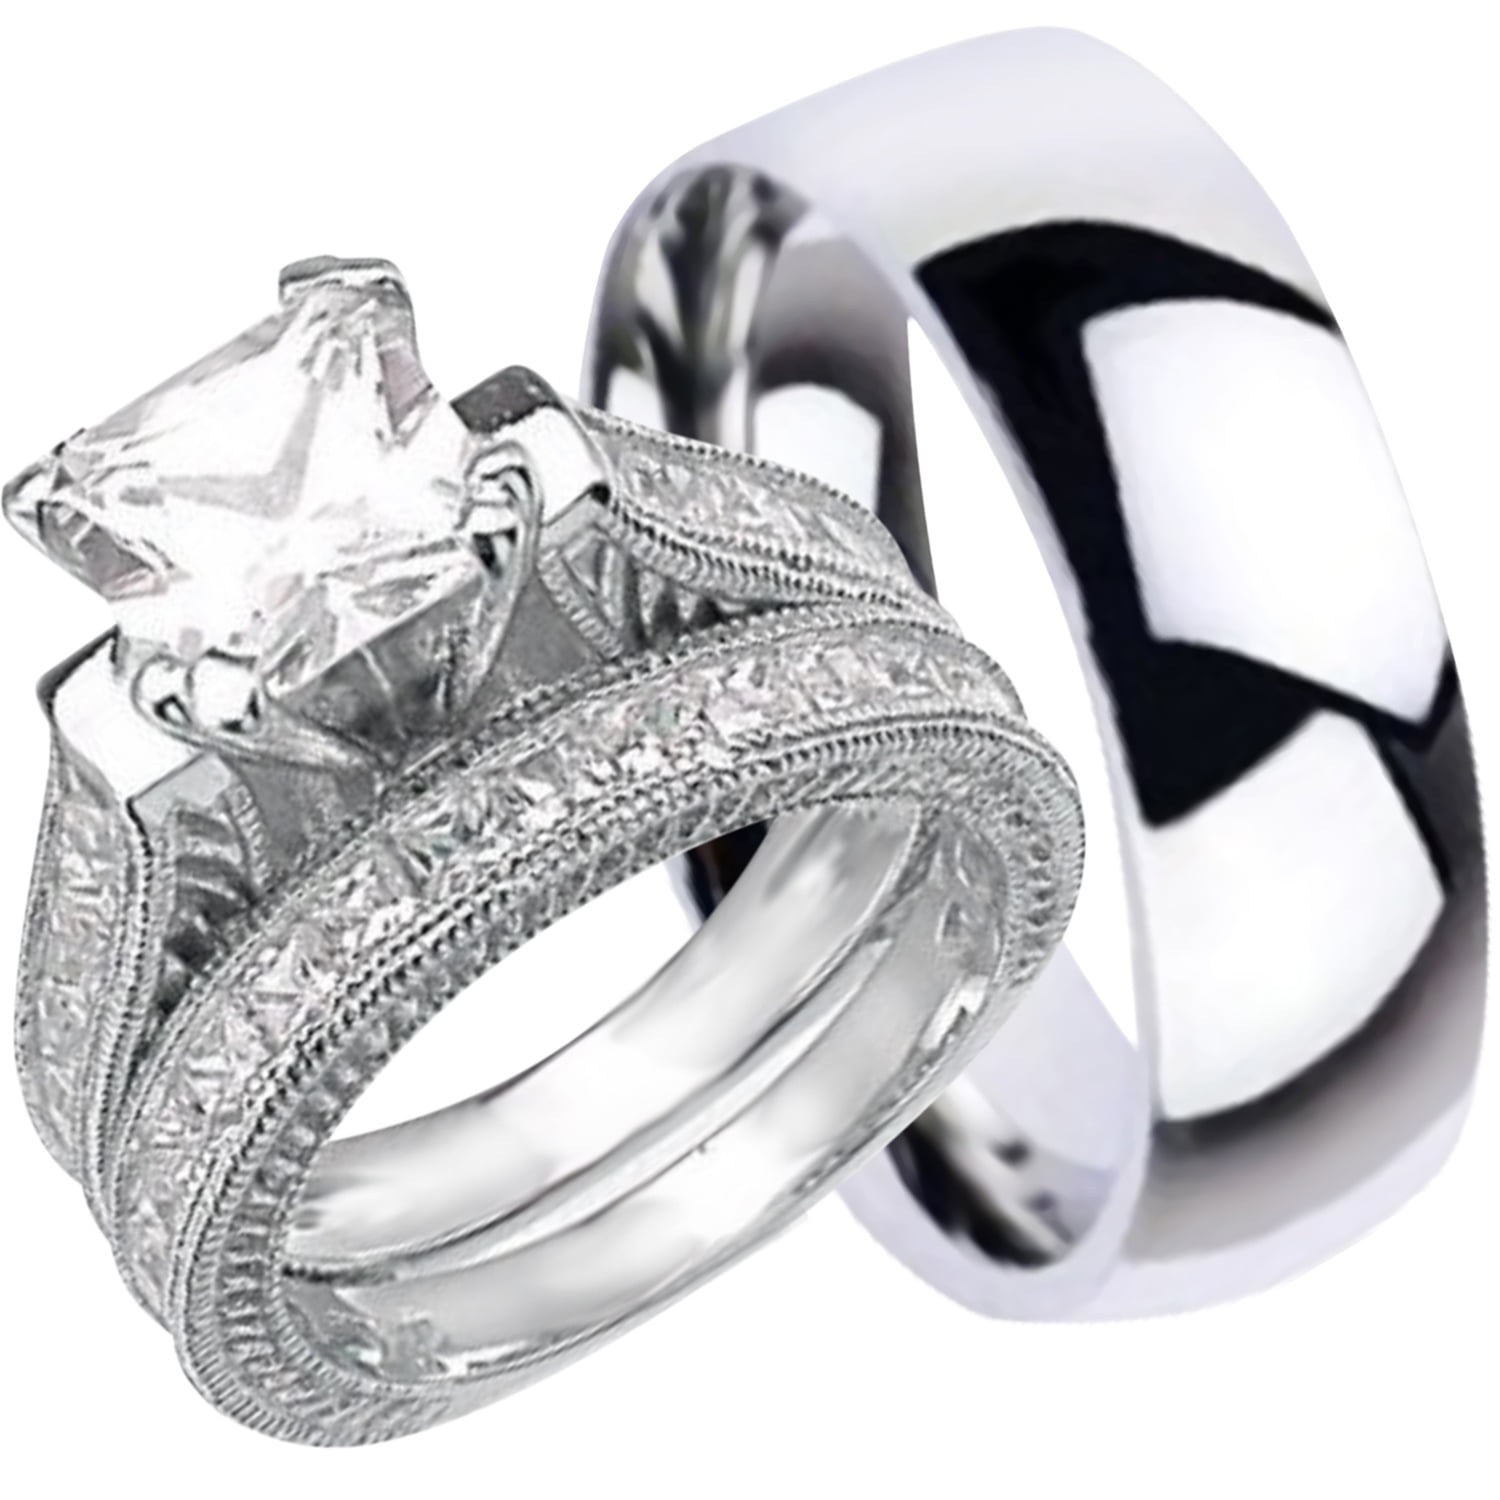 8MM Titanium Rings Set Wedding Bands Black Tire Design Bridal Jewelry Size 6-13 